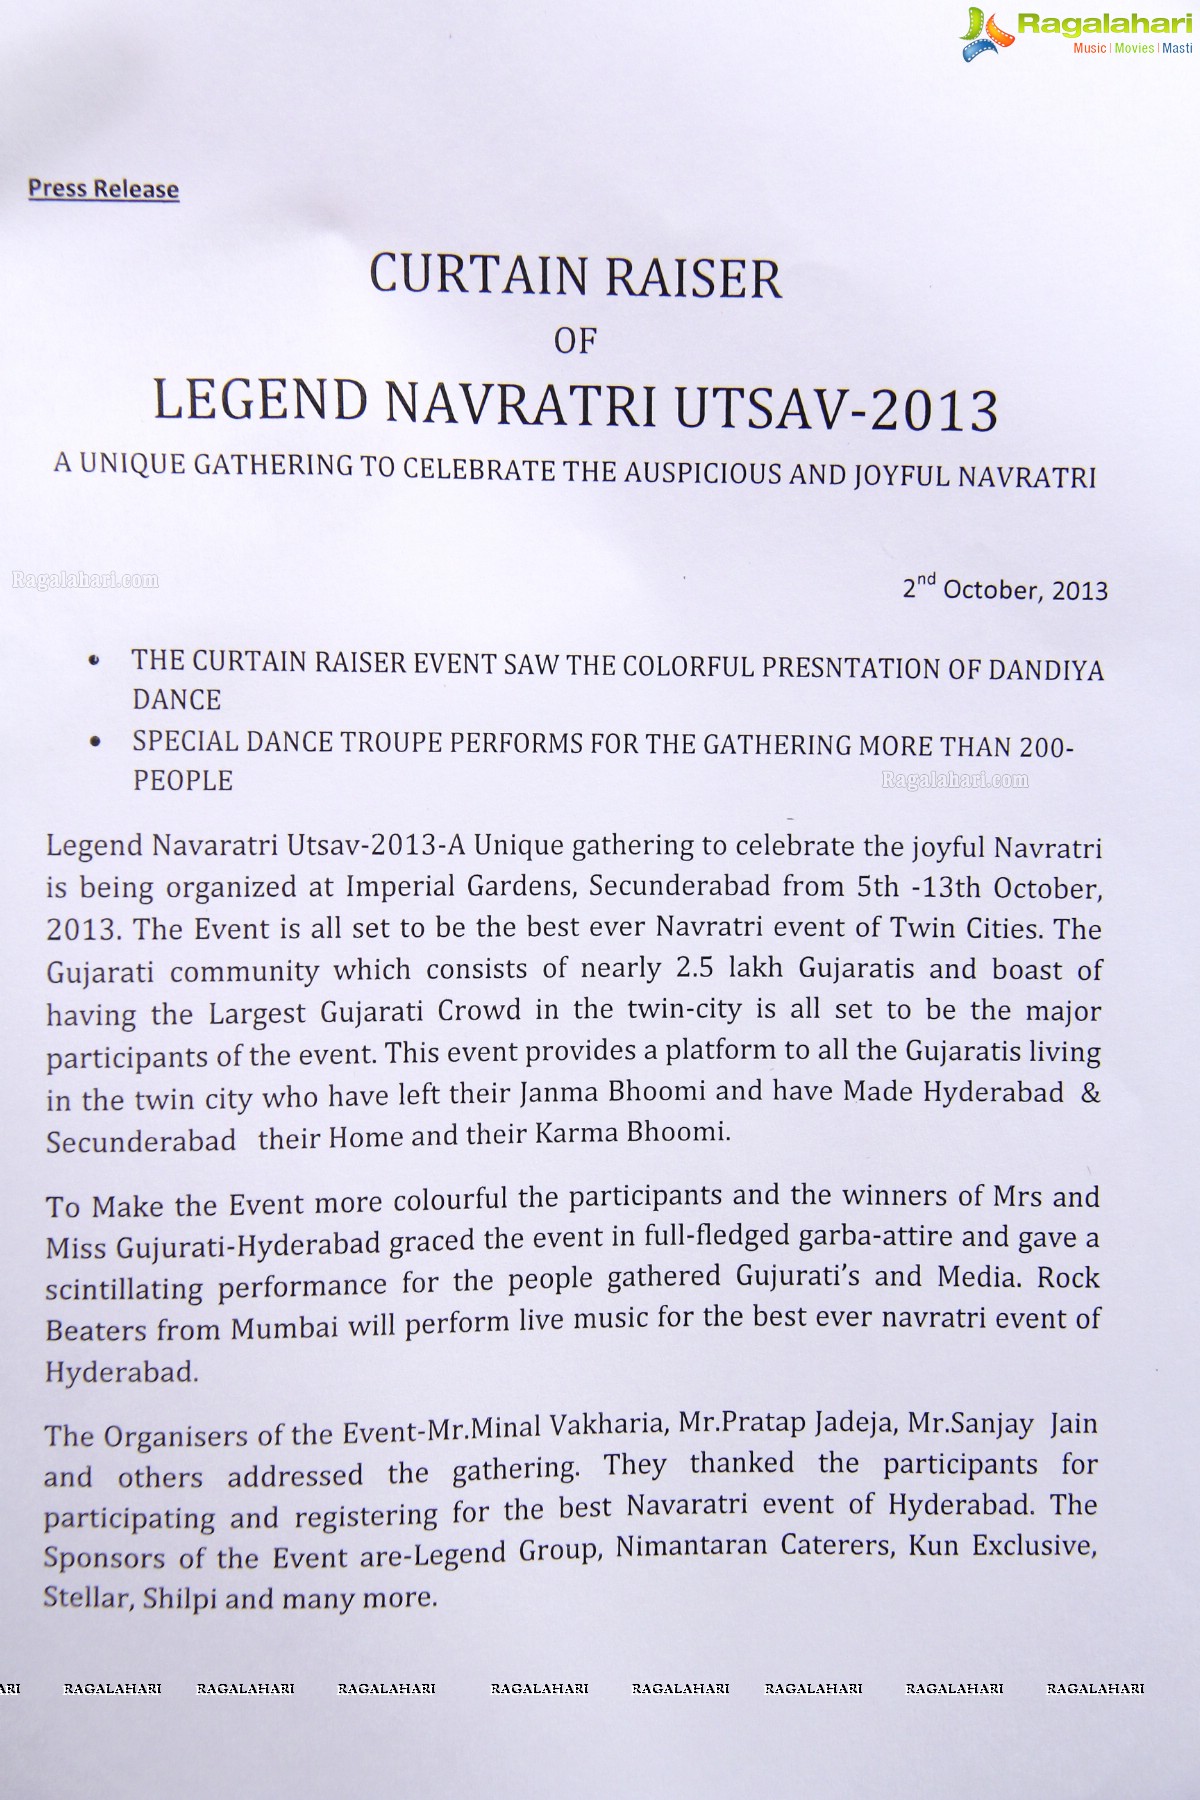 Legend Navratri Utsav 2013 Curtain Raiser